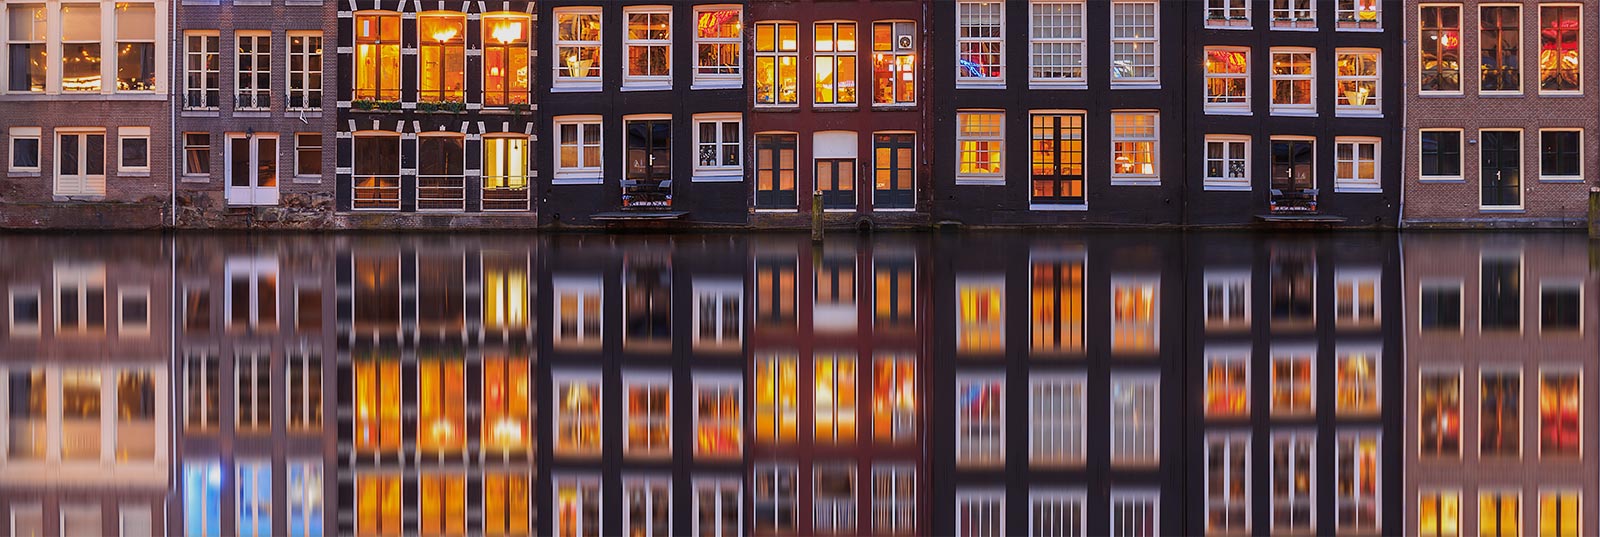 Guía turística de Amsterdam